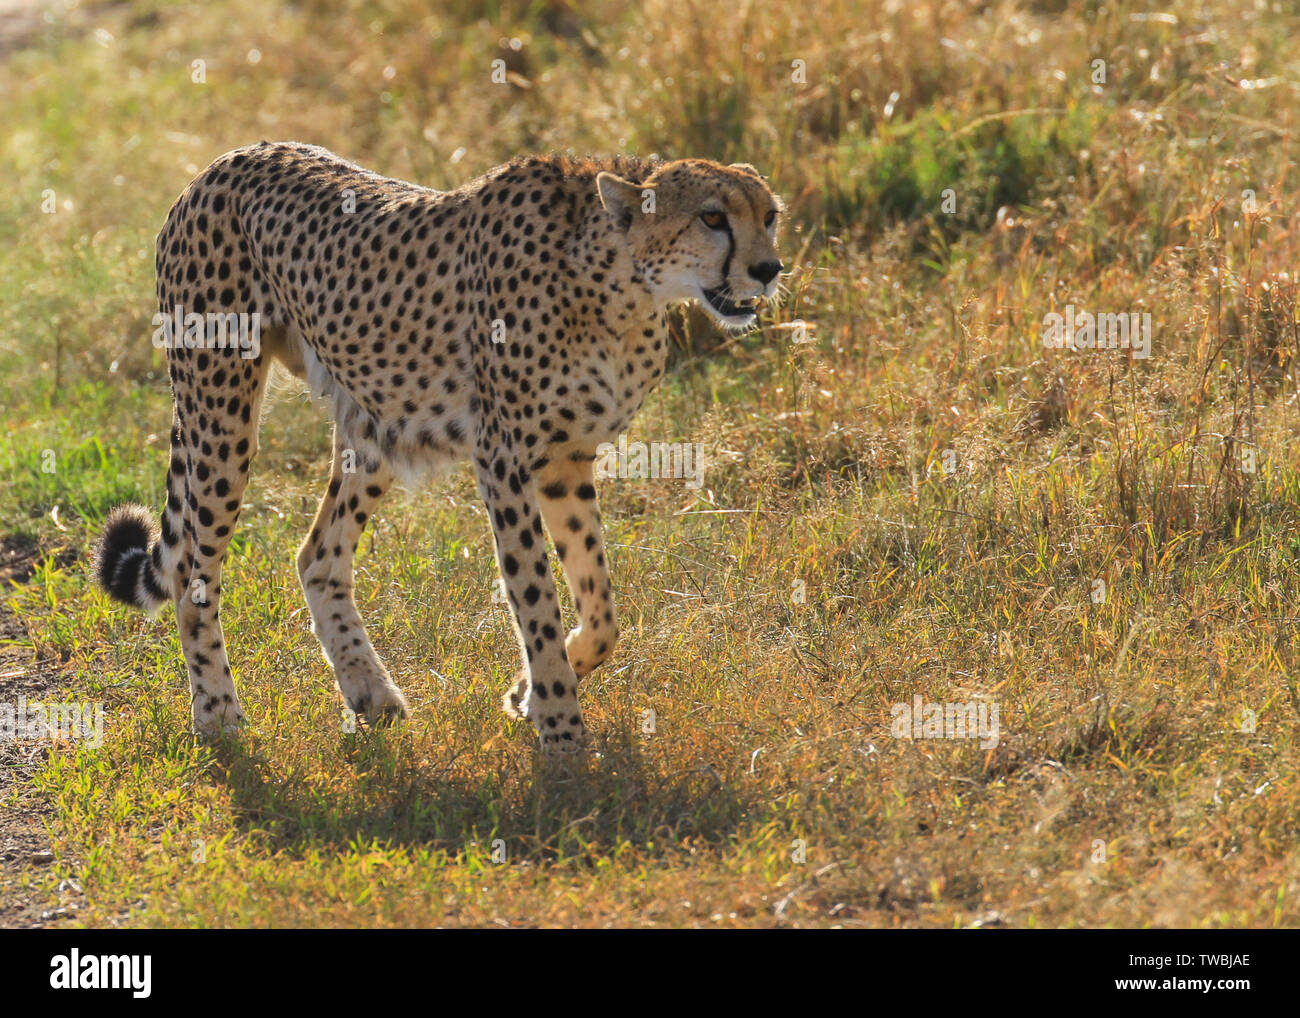 Gepard Acinonyx jubatus weiblichen dünn und hungrige Raubtier mit schwarzen Flecken wandern Savannah gras Masai Mara National Reserve Kenia Ostafrika Stockfoto